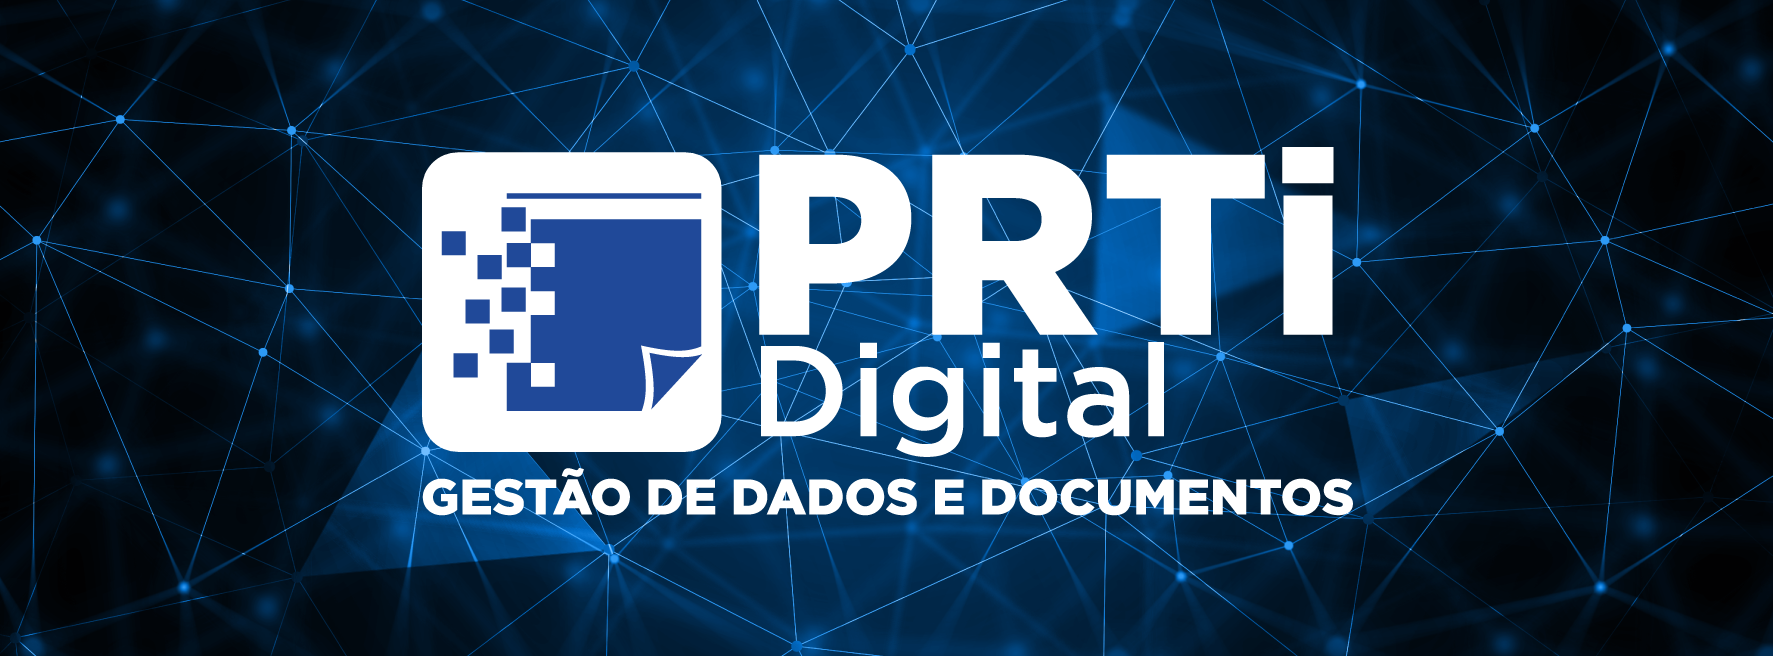 PRTi Digital também confirma presença no INFORMATIONSHOW 2019